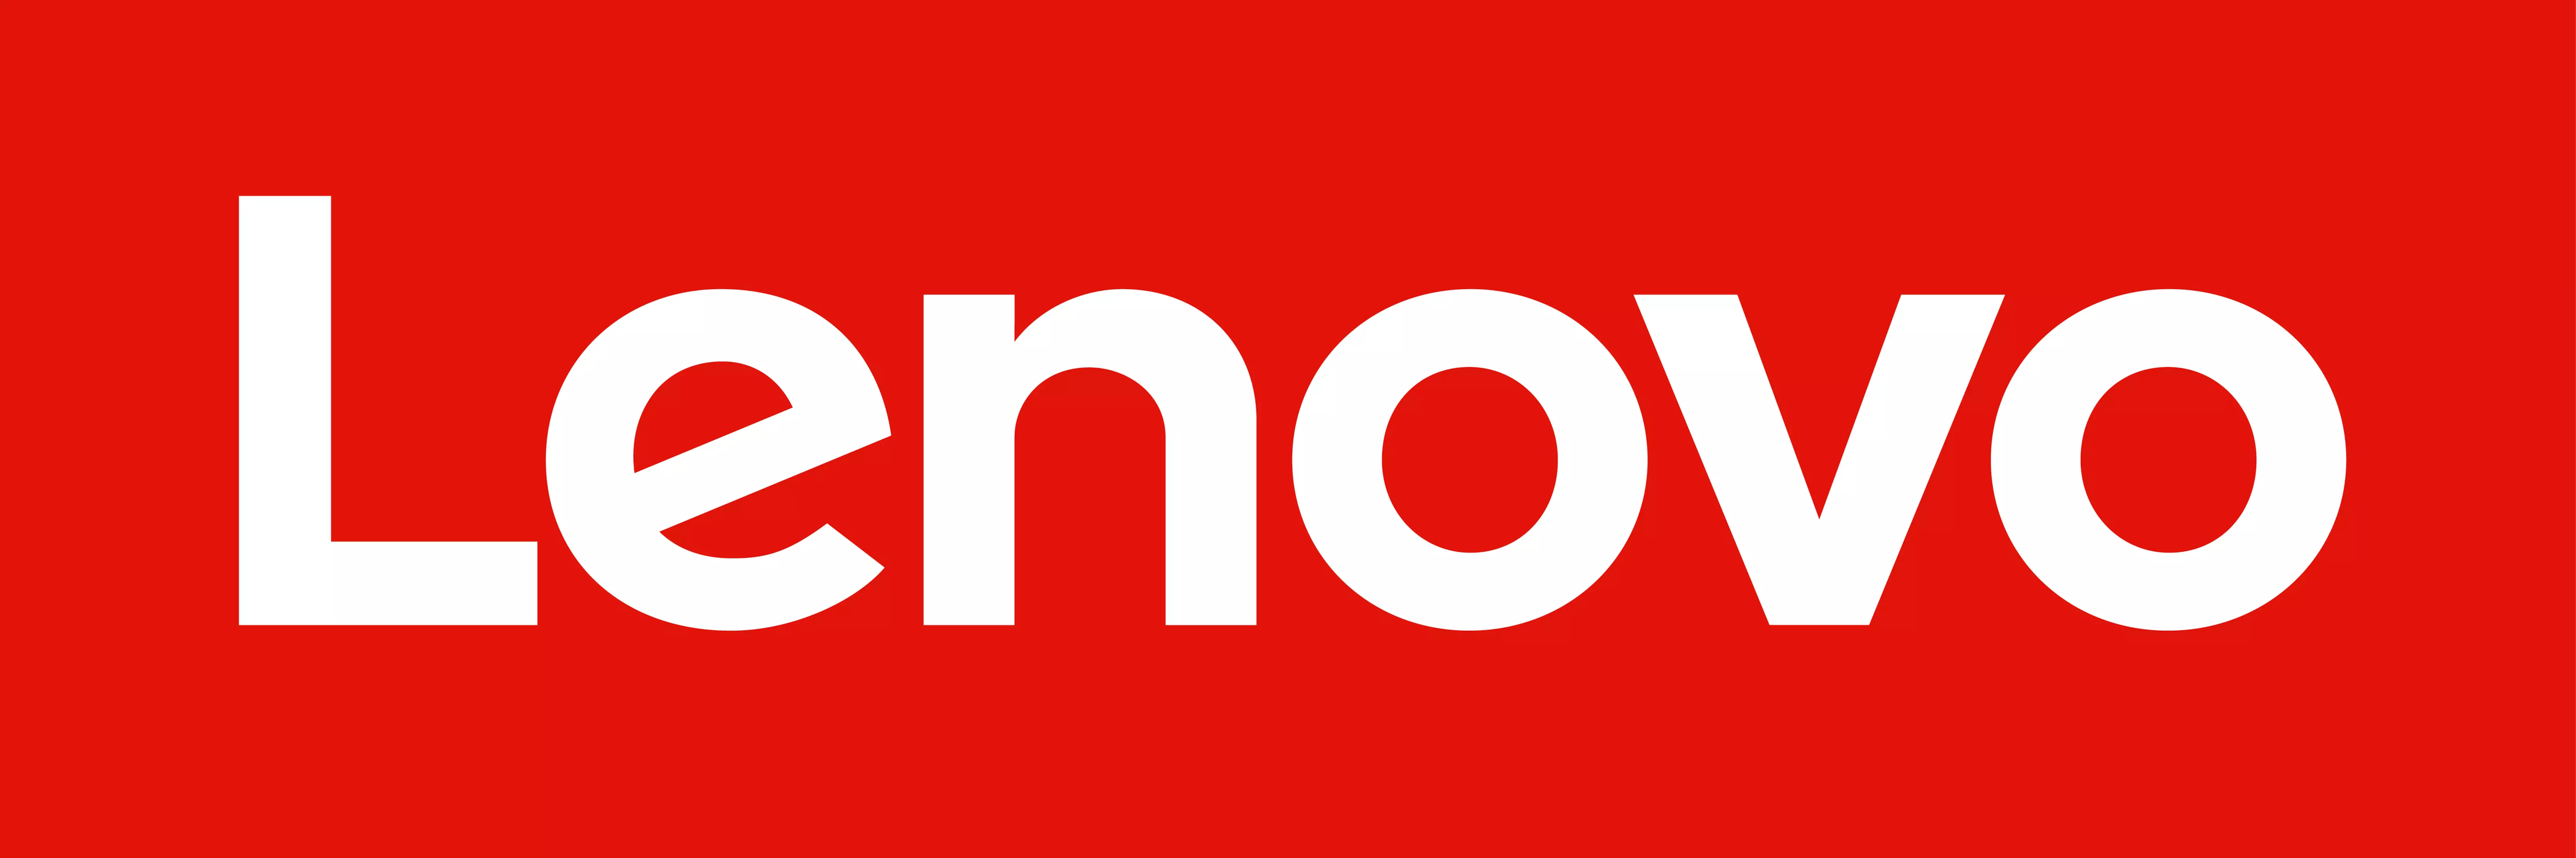 Lenovo red logo